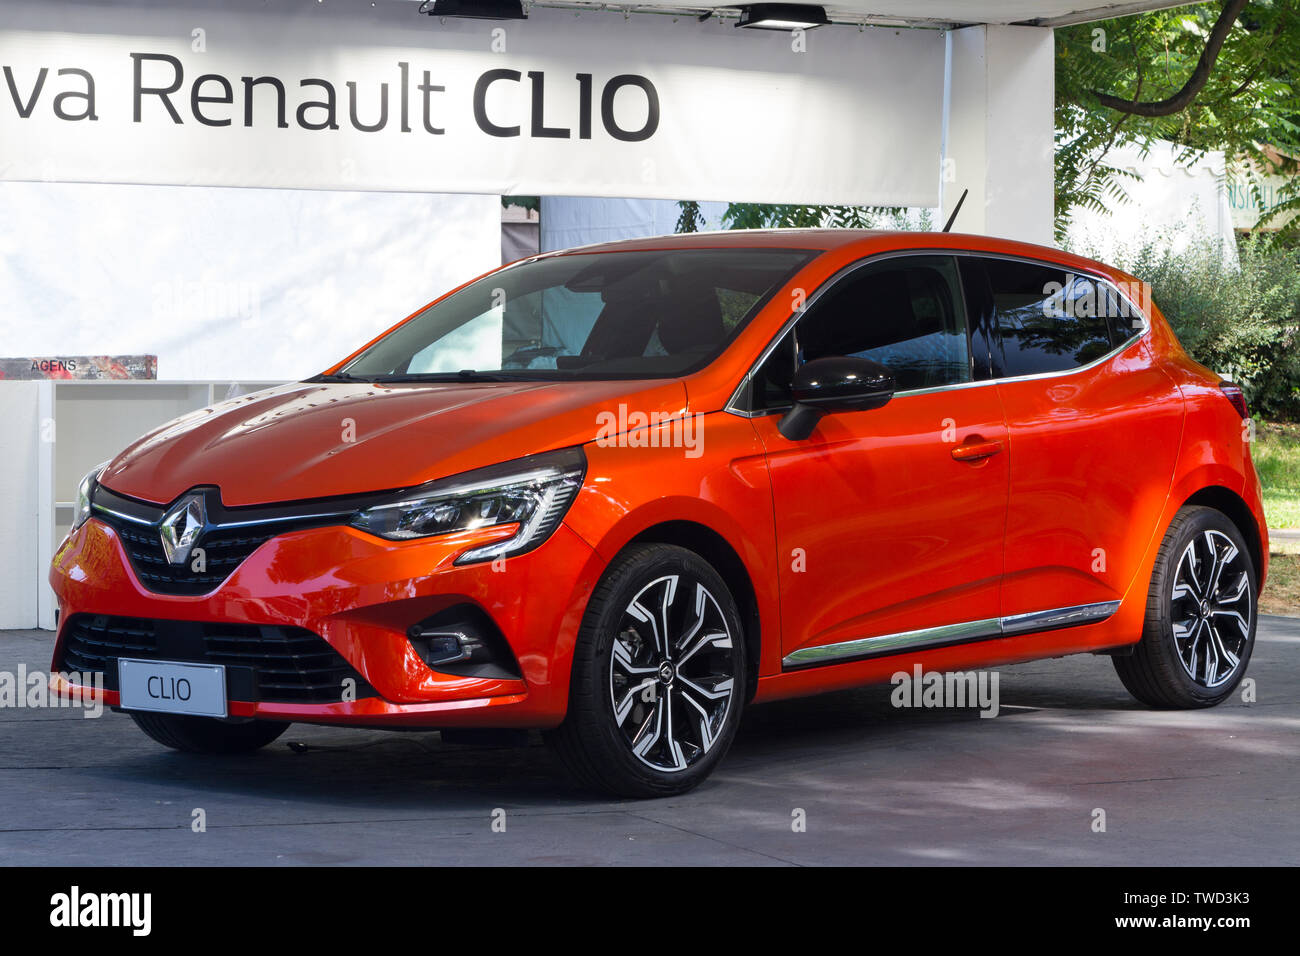 Renault Clio IV 0.9 TCe Stock Photo - Alamy